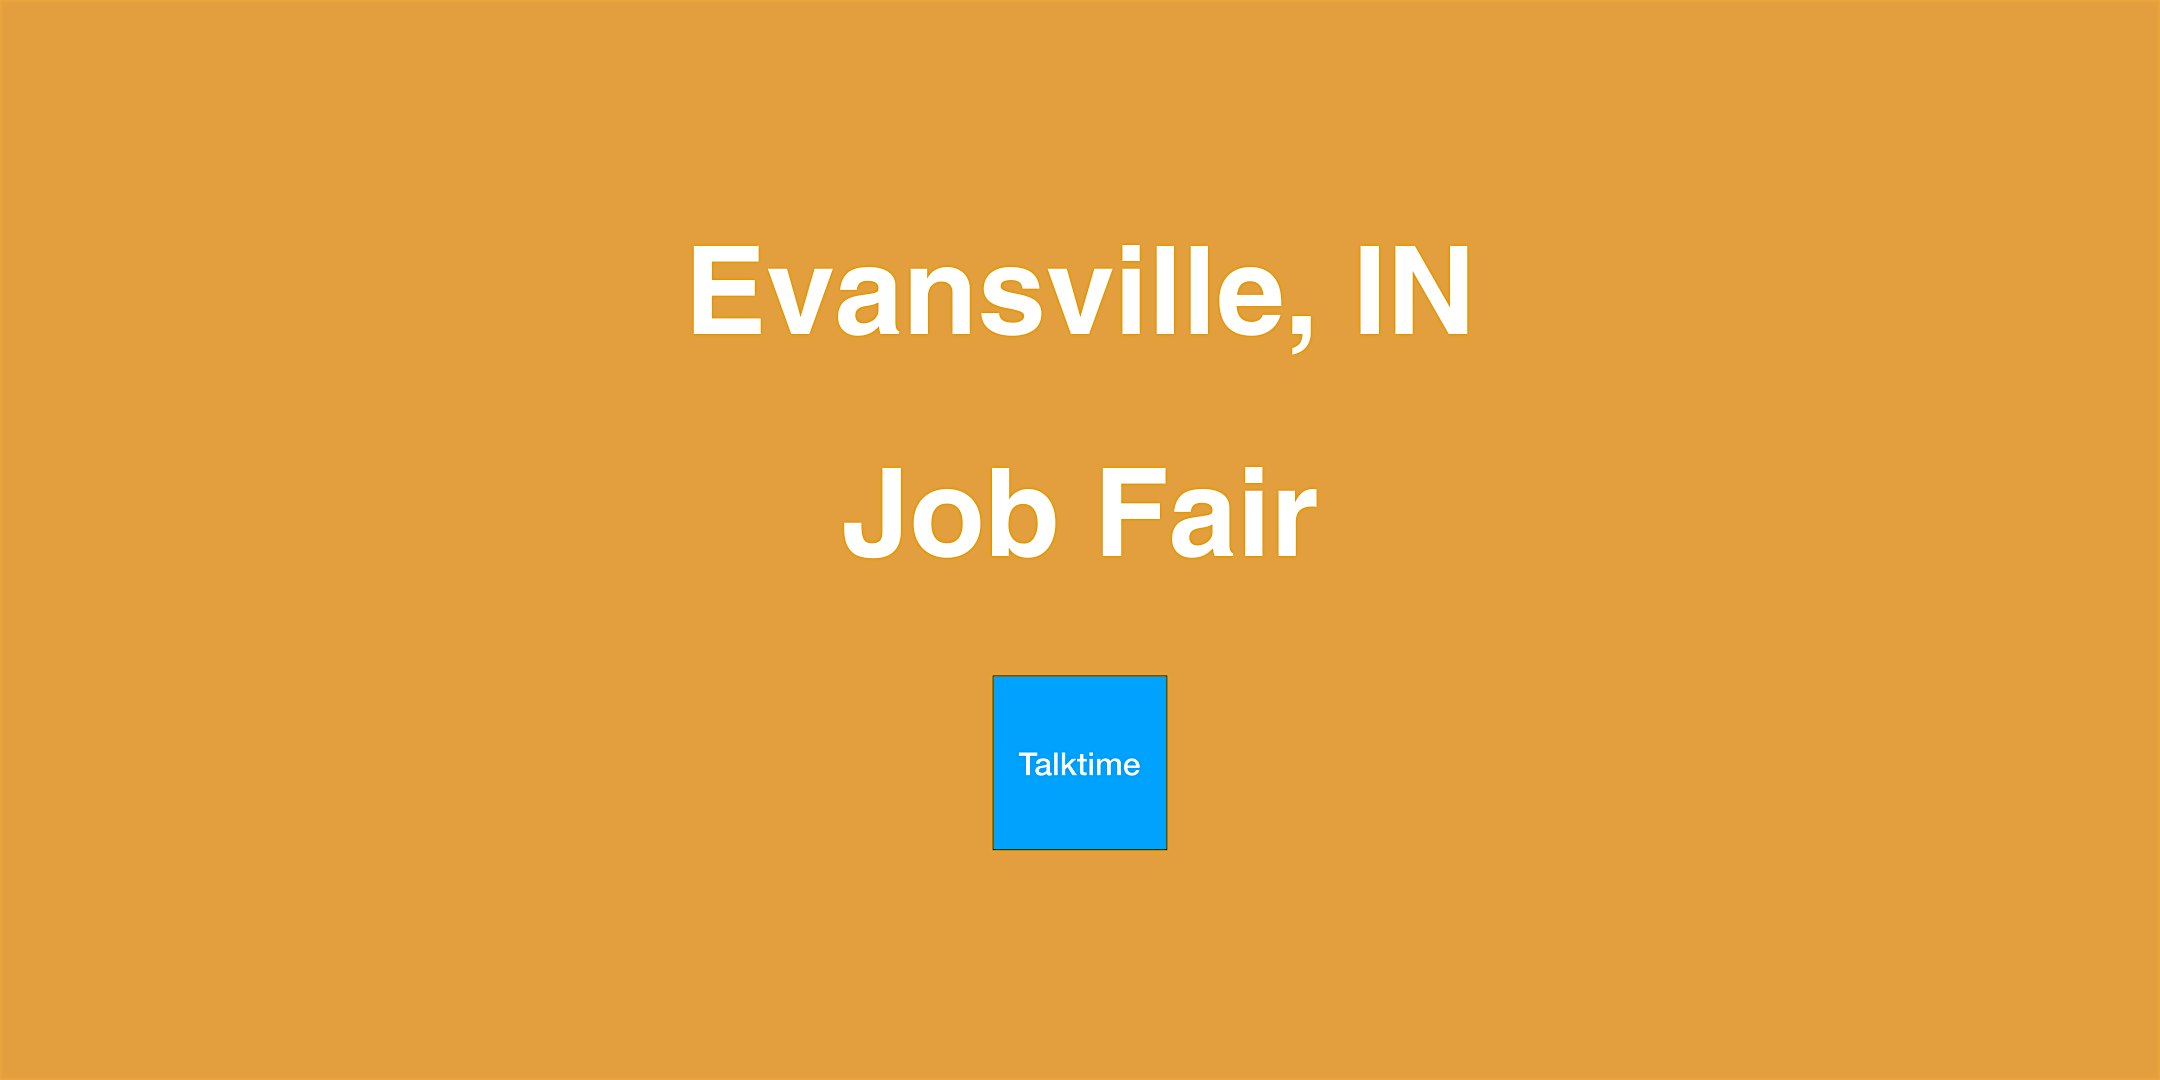 Job Fair - Evansville